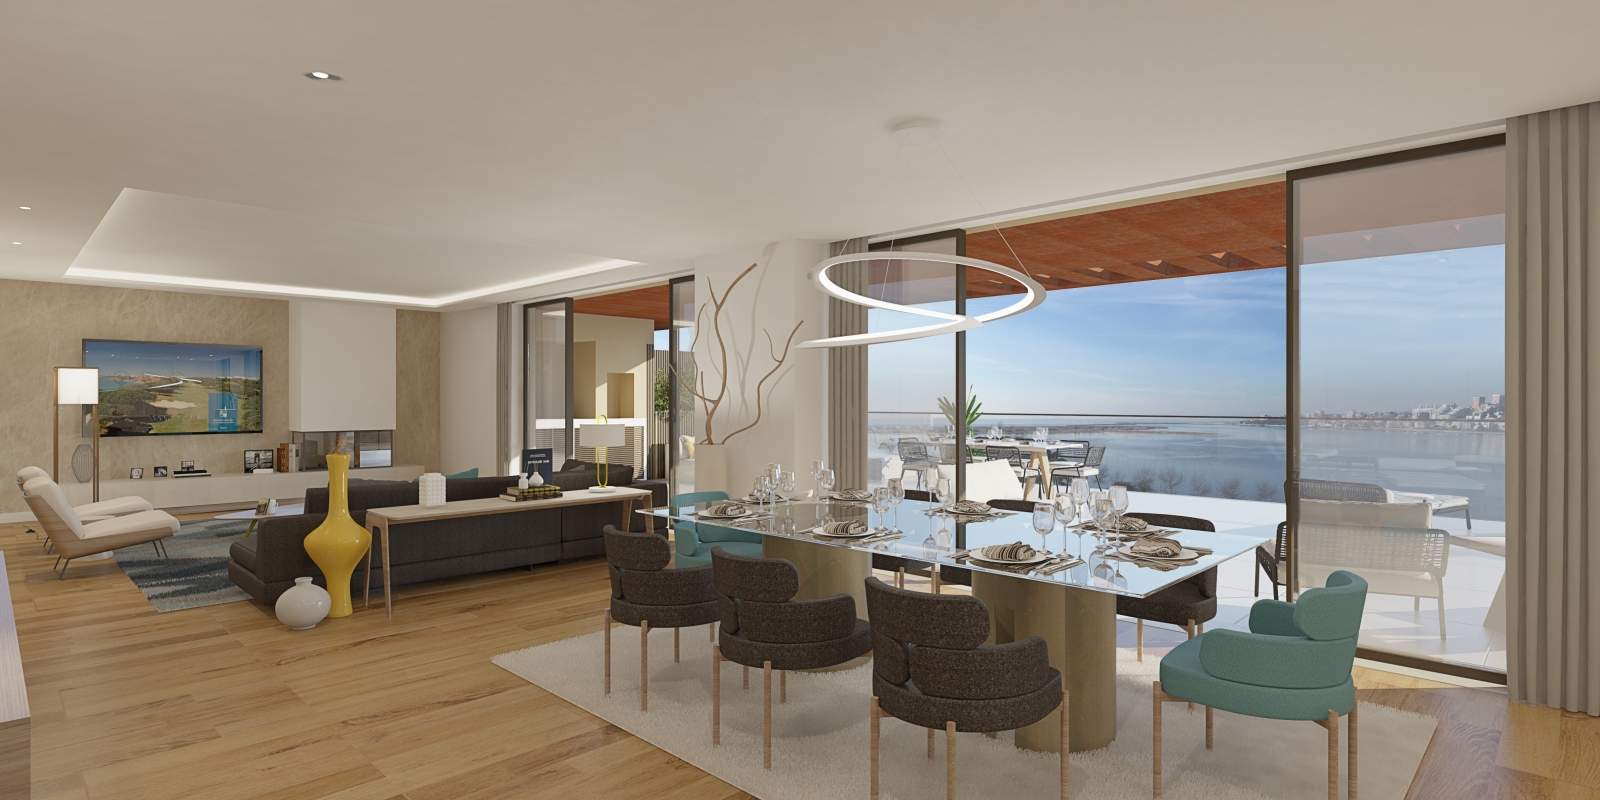 Apartment for sale with terrace, in exclusive condominium, V. N. Gaia, Porto, Portugal_176020